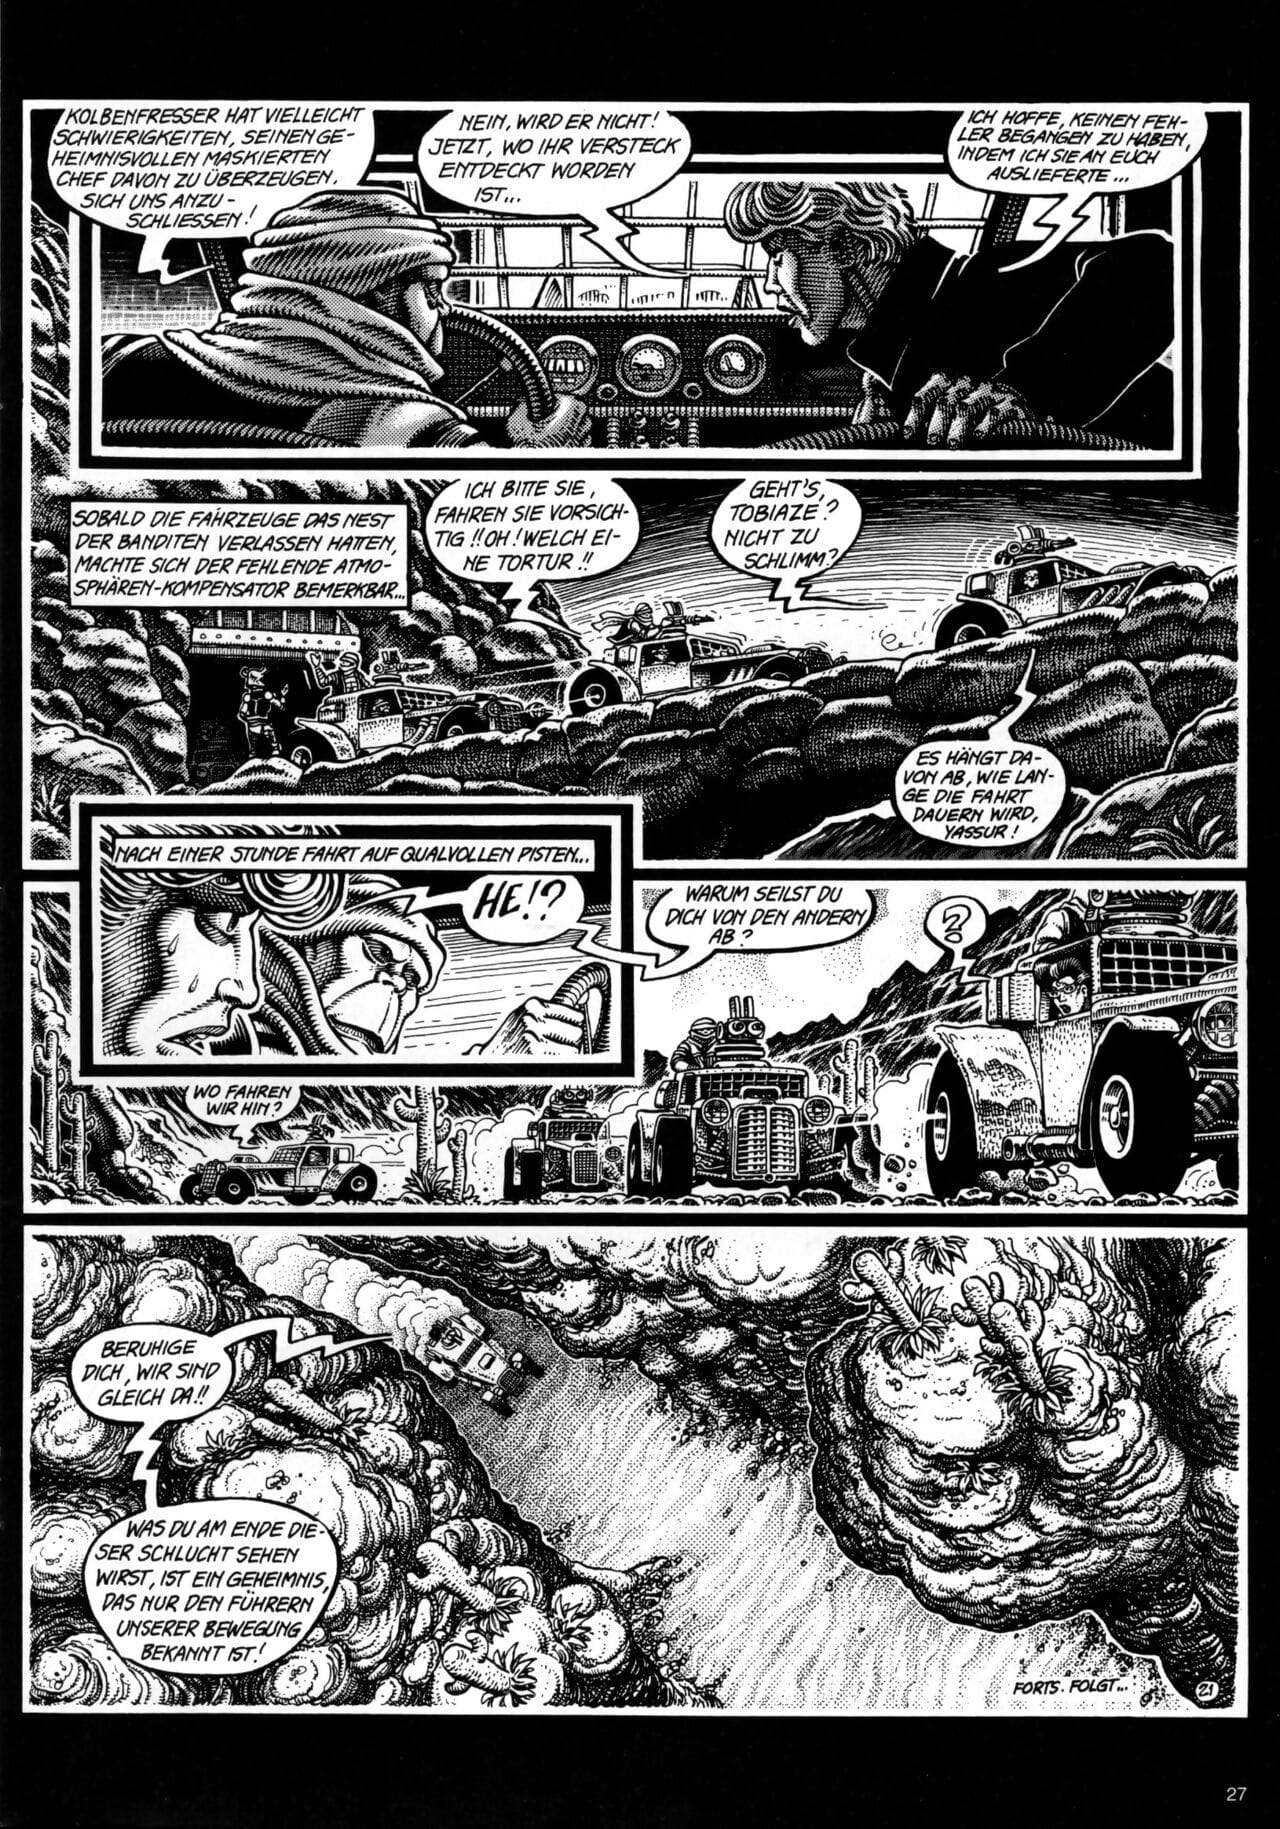 Schwermetall #039 Parte 2 page 1